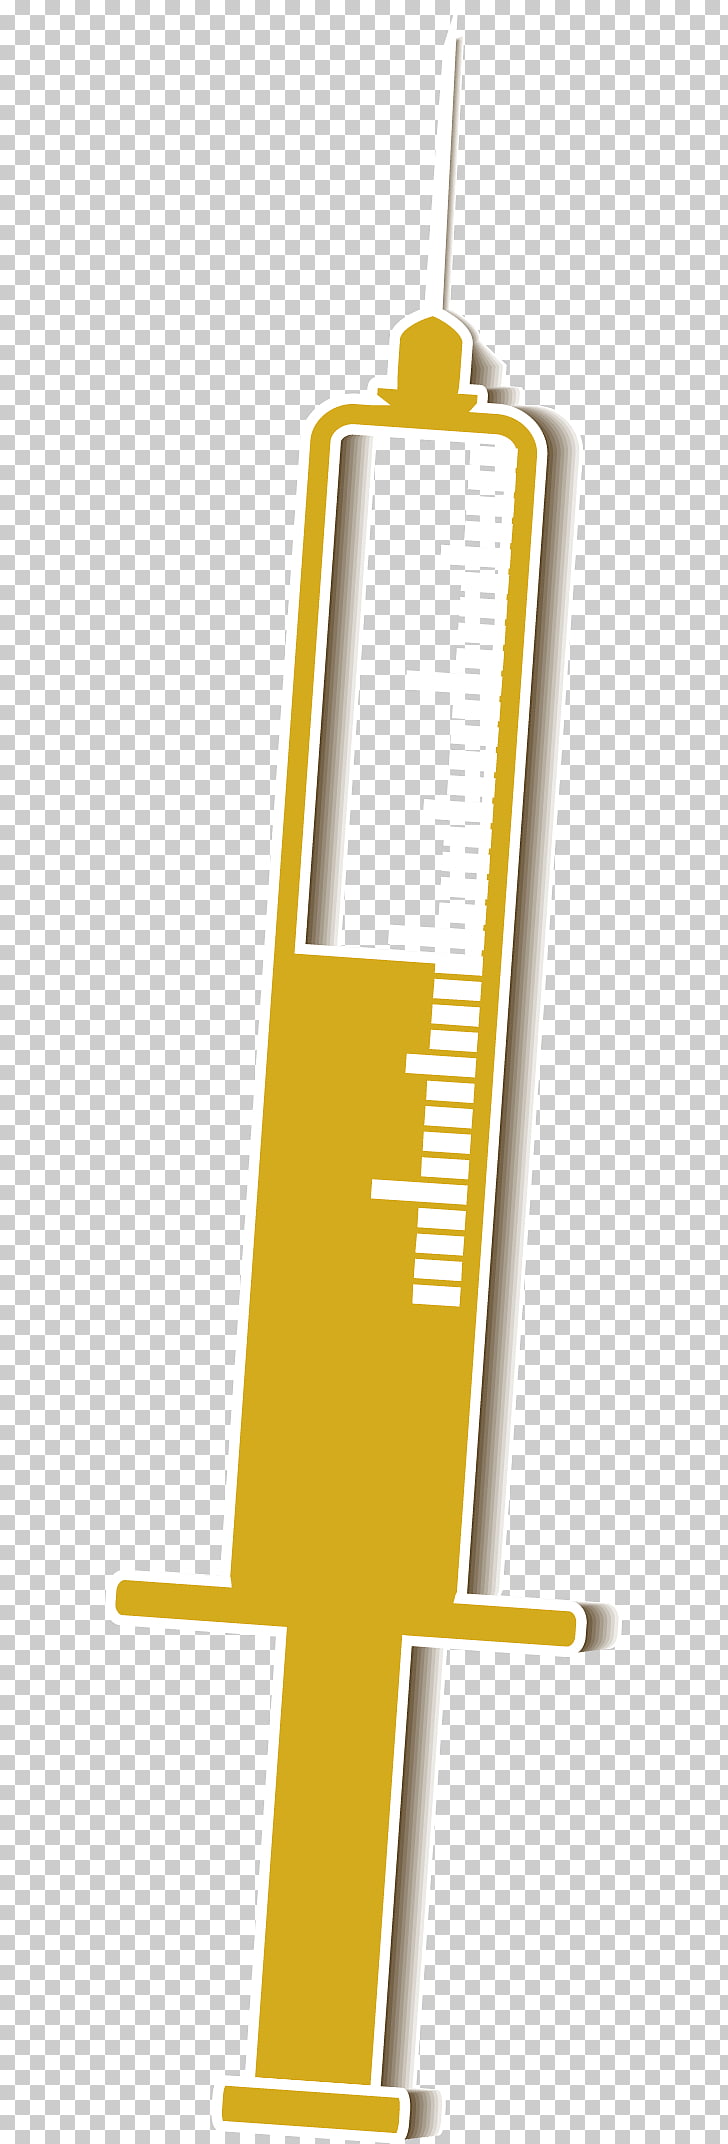 Syringe yellow graphic.